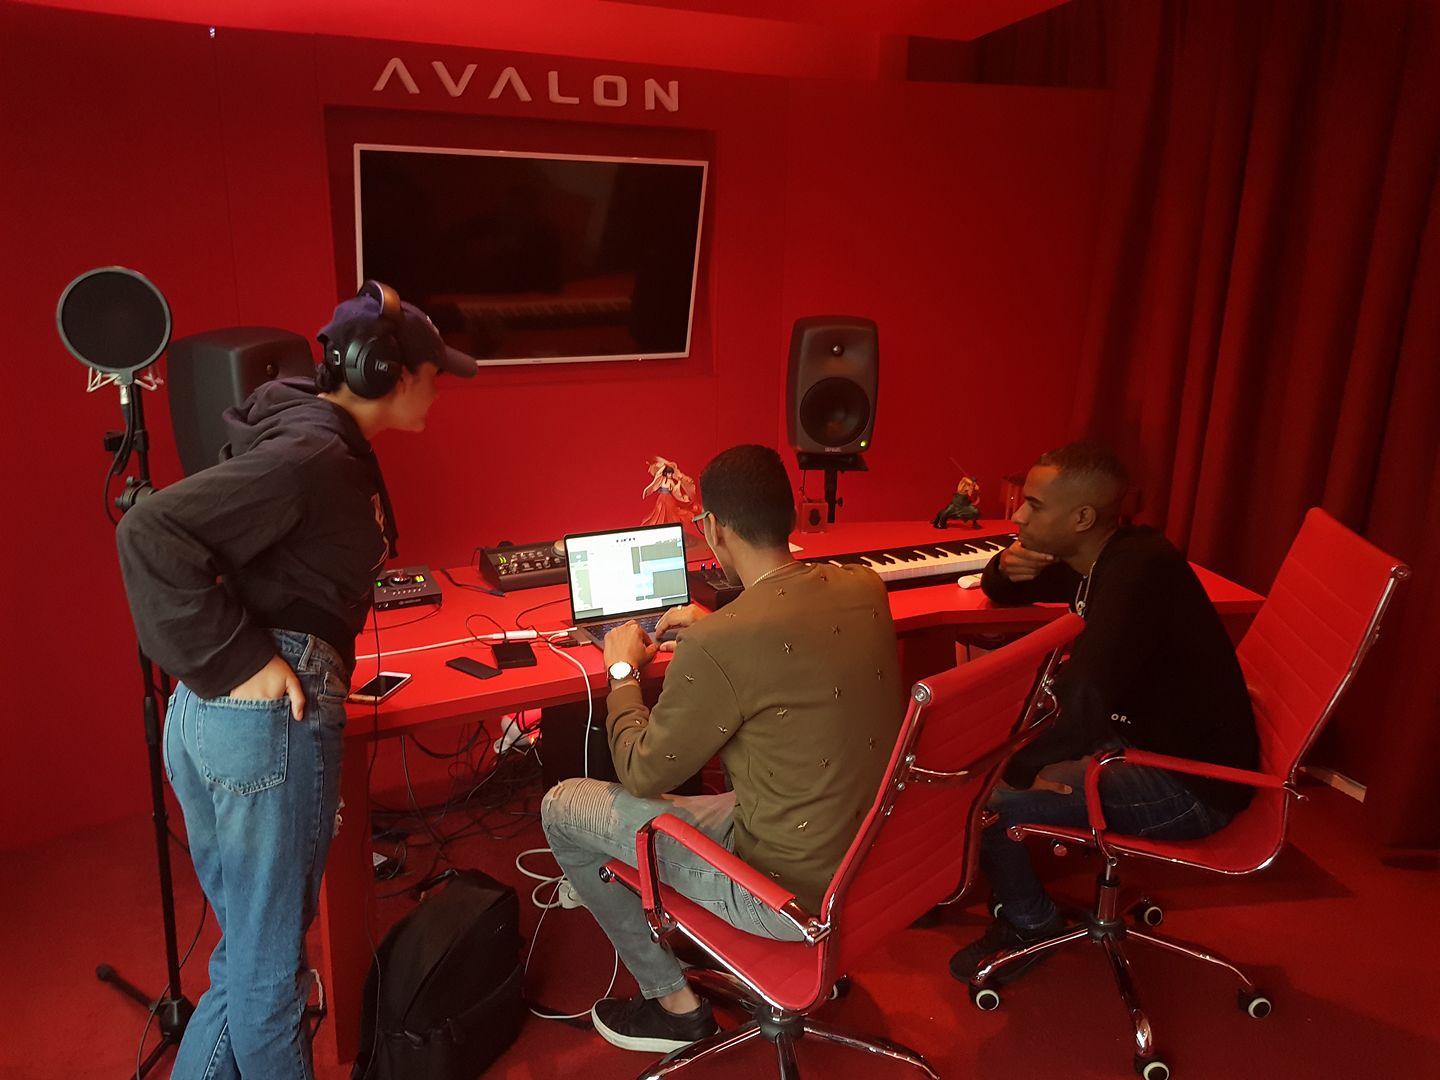 Avalon Studio